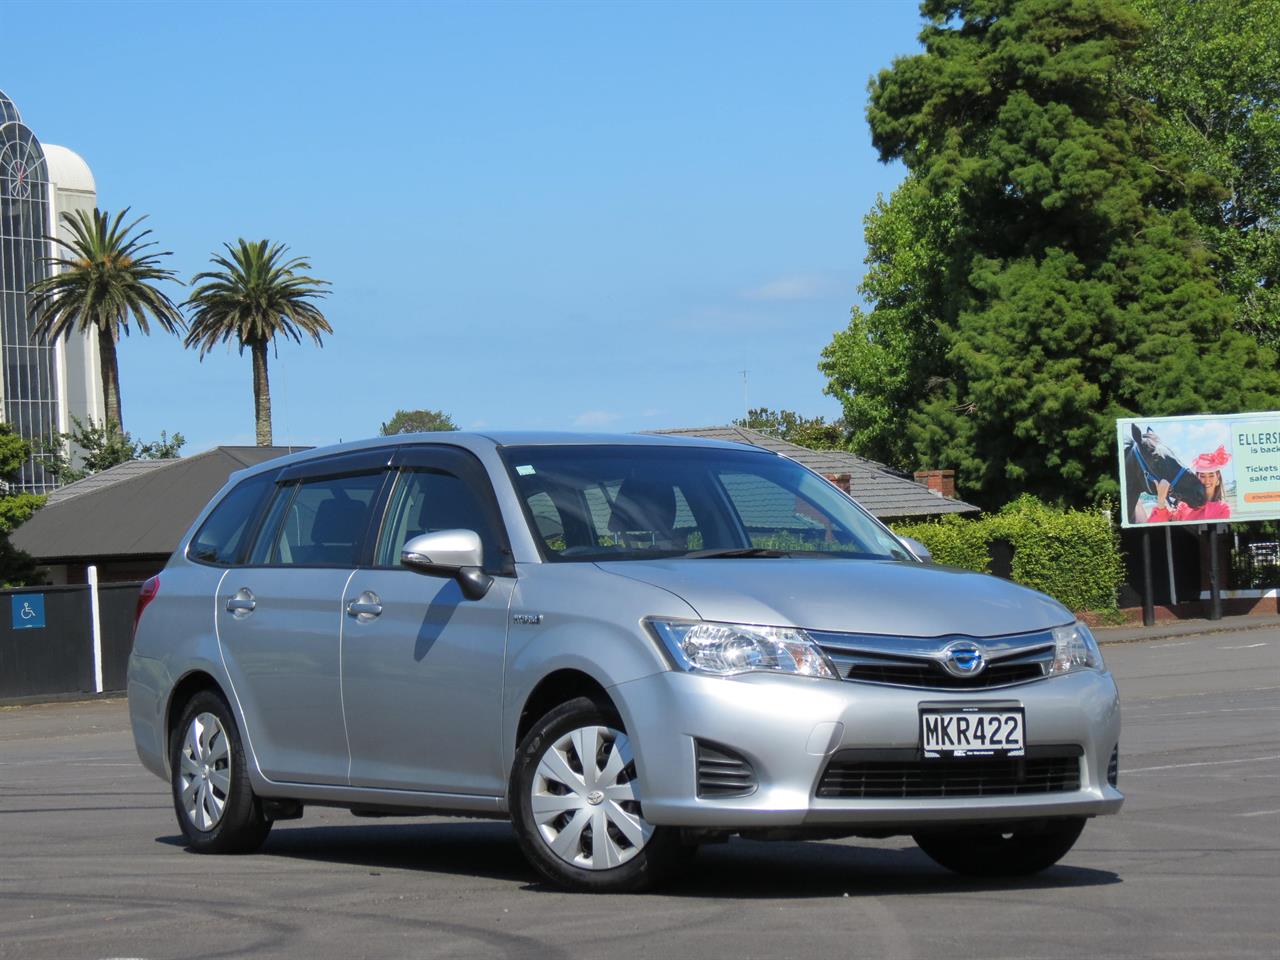 NZC best hot price for 2014 Toyota Fielder in Auckland